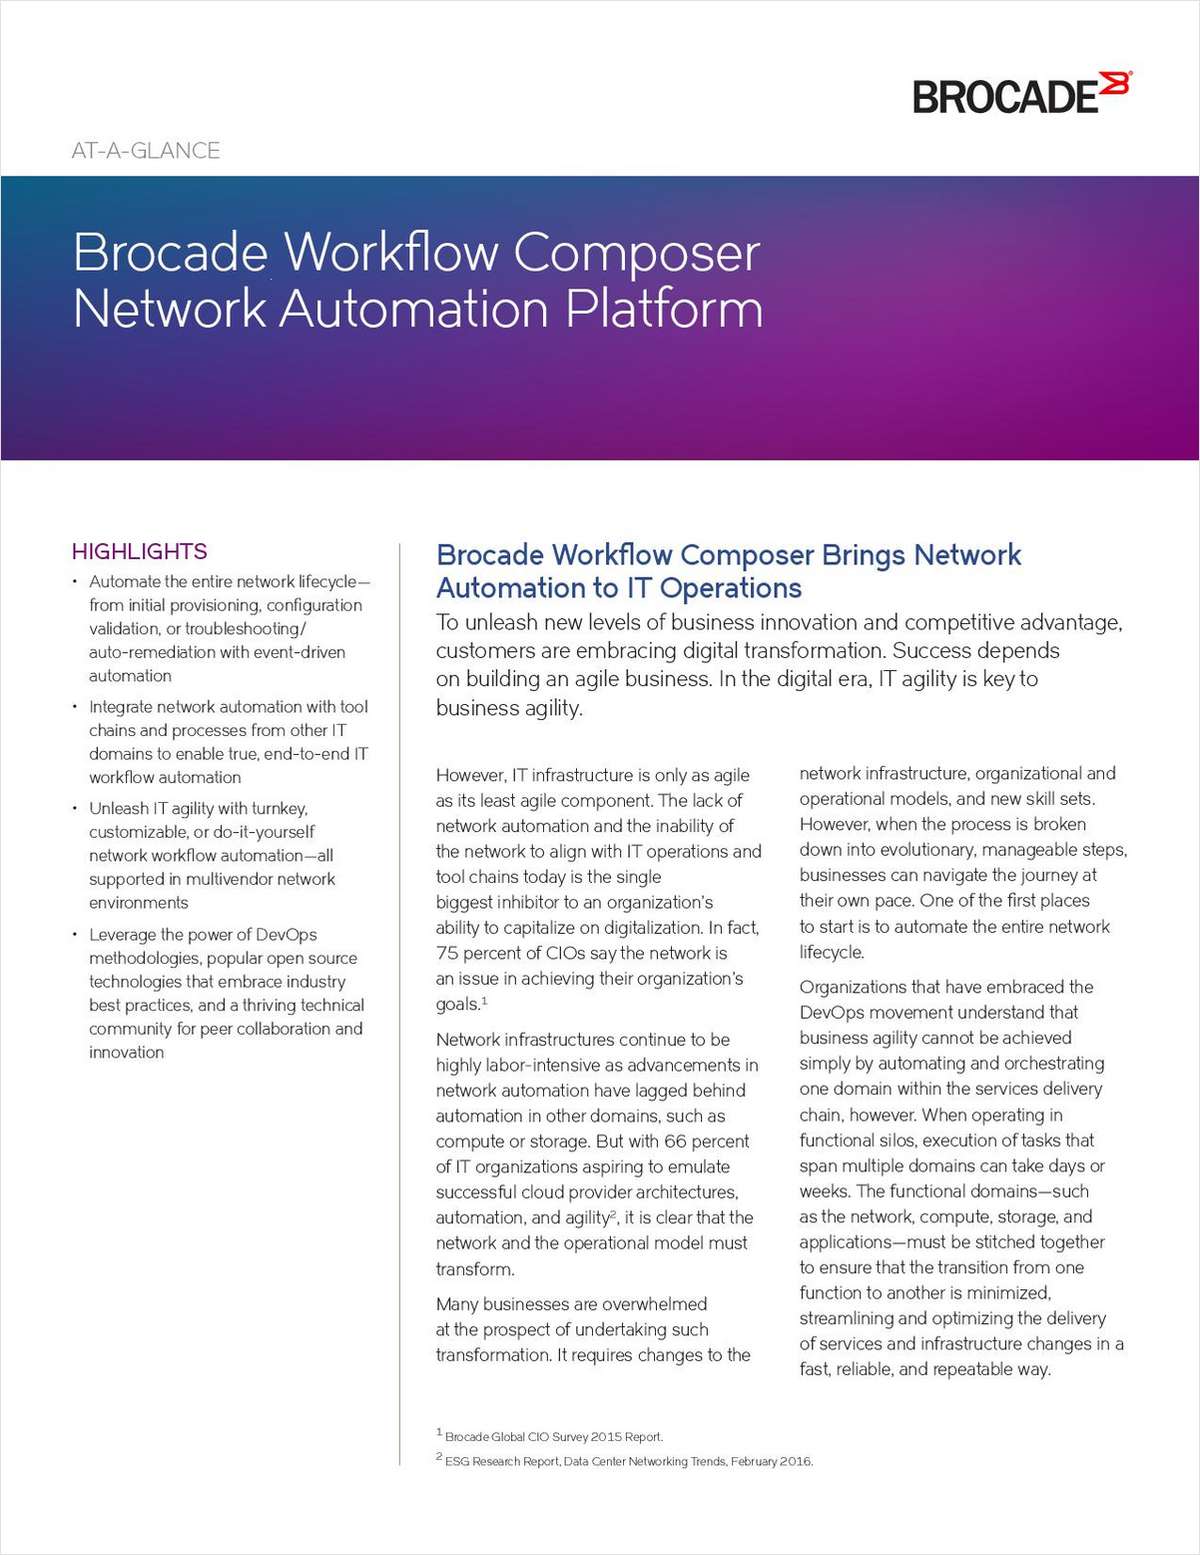 Brocade Workflow Composer Network Automation Platform